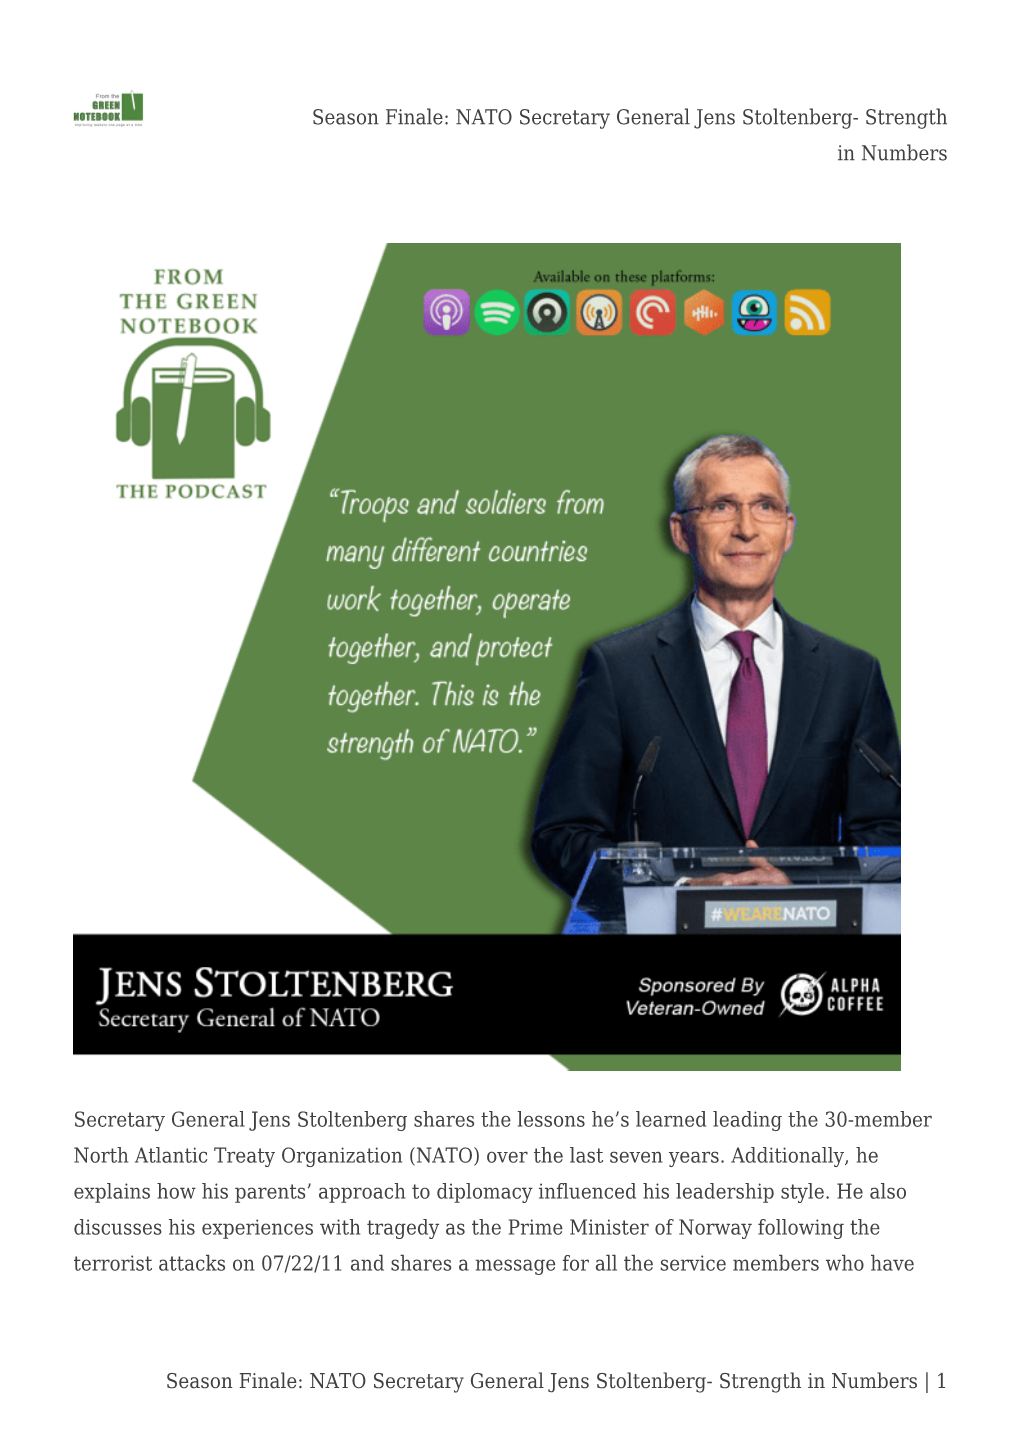 Season Finale: NATO Secretary General Jens Stoltenberg- Strength in Numbers